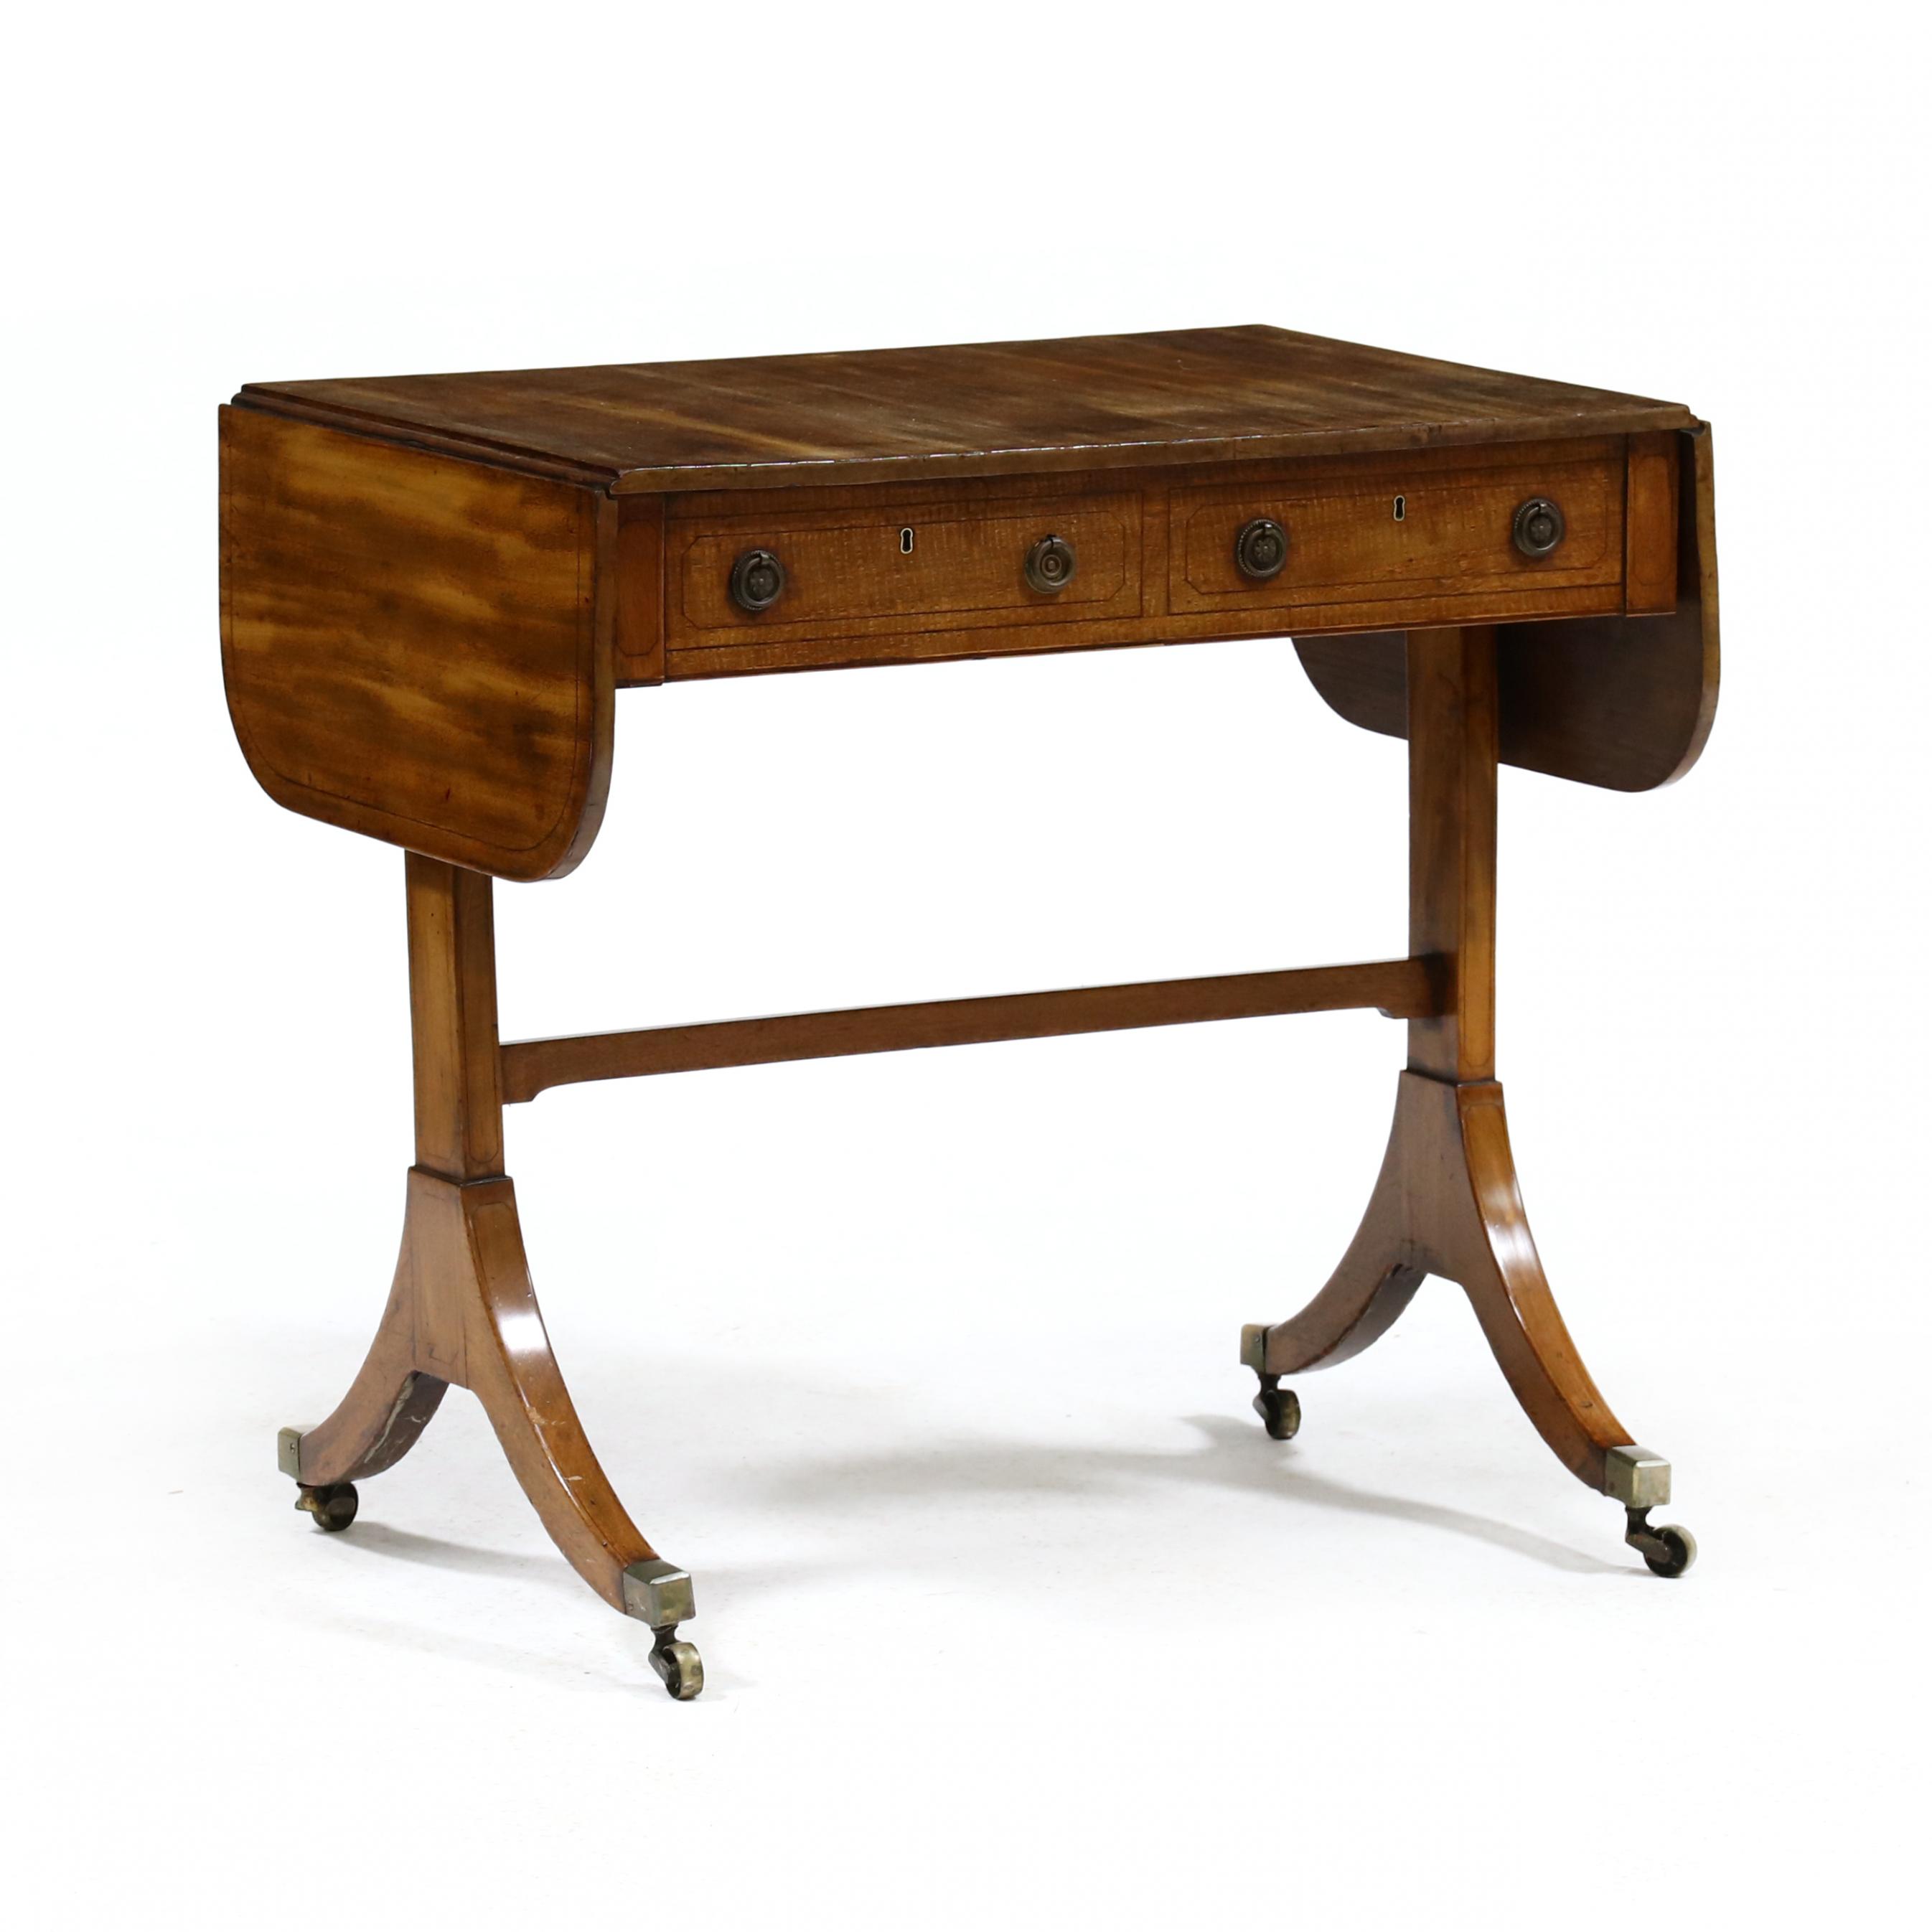 Lot - A Regency style mahogany drop leaf pedestal table late 19th